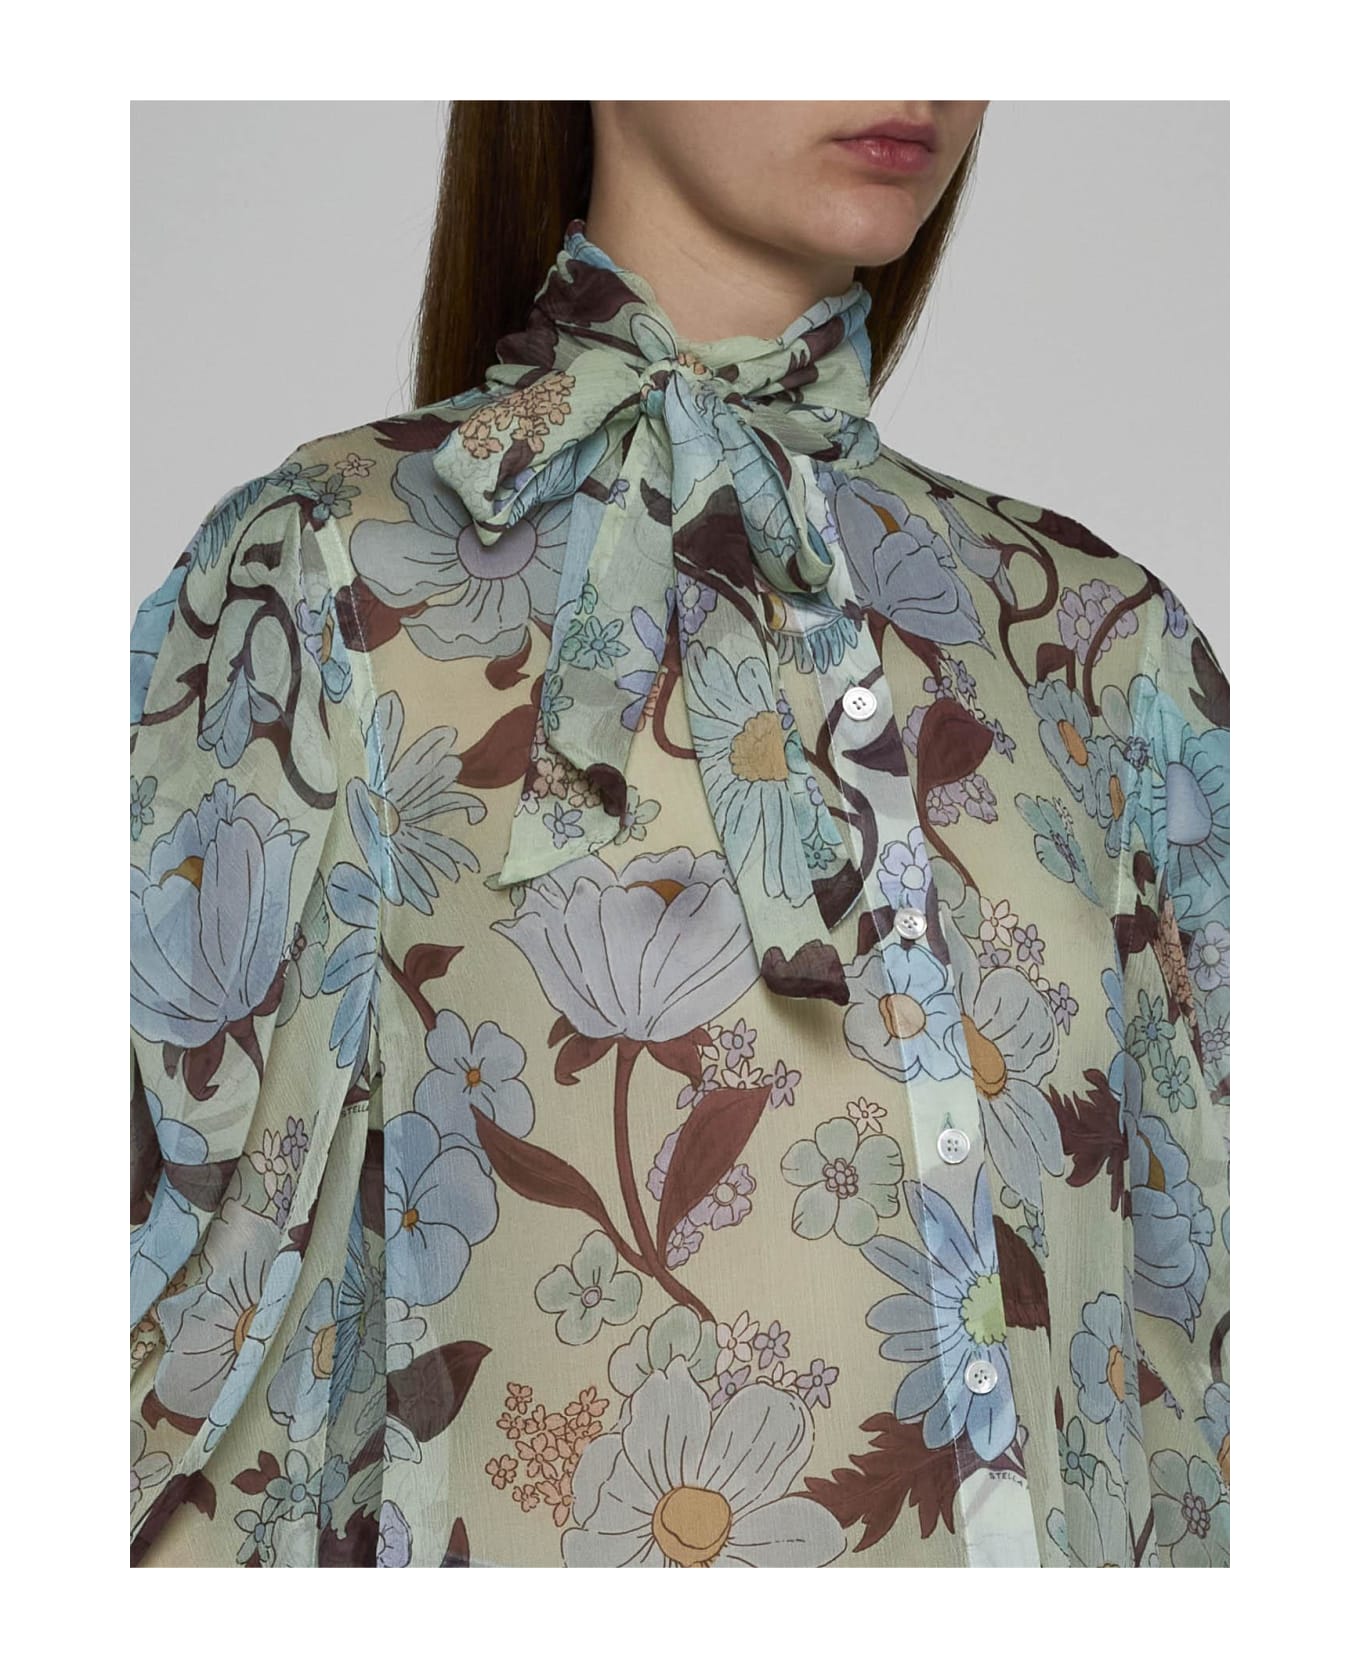 Stella McCartney Floral Print Silk Shirt - Multicolor mint